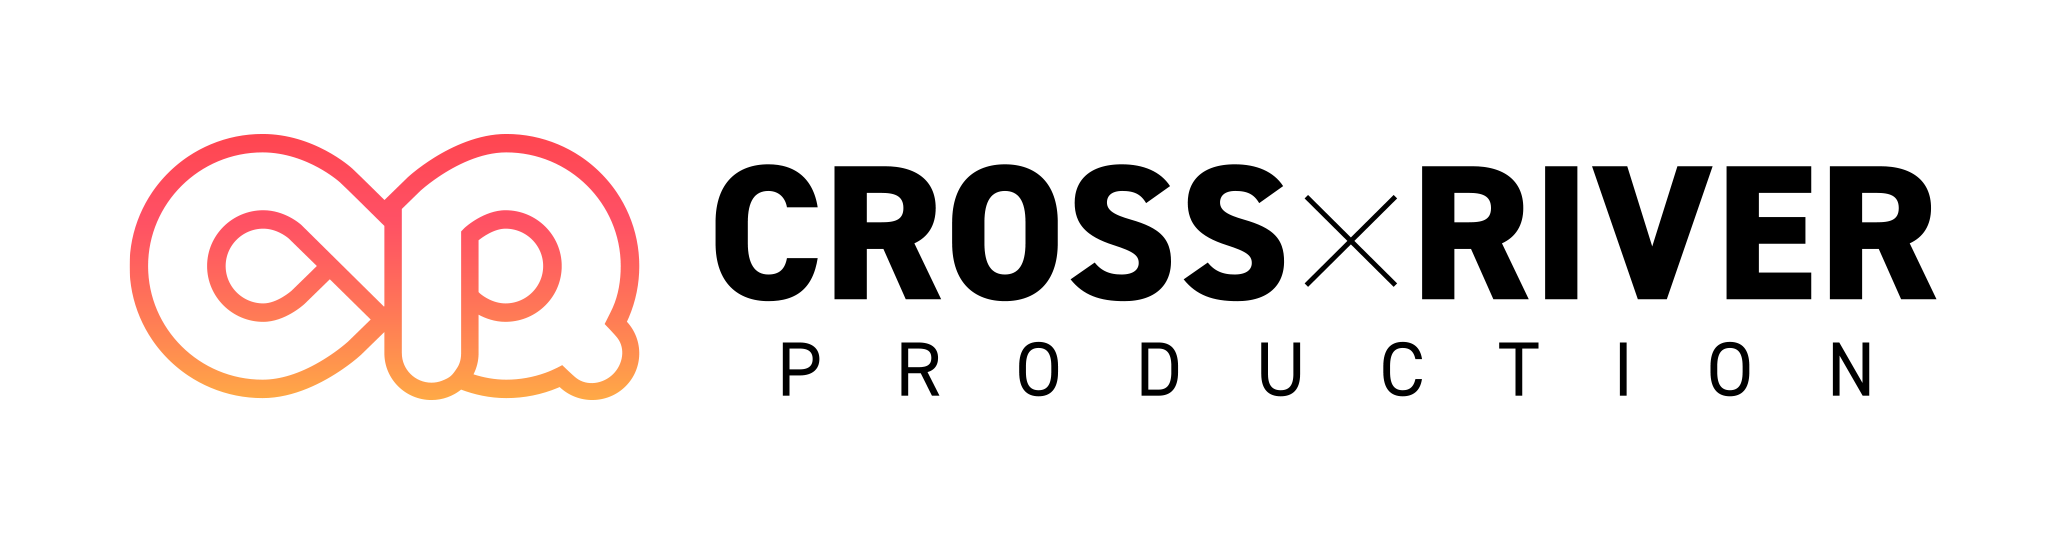 CROSS×RIVER PRODUCTION (クリプロ) 